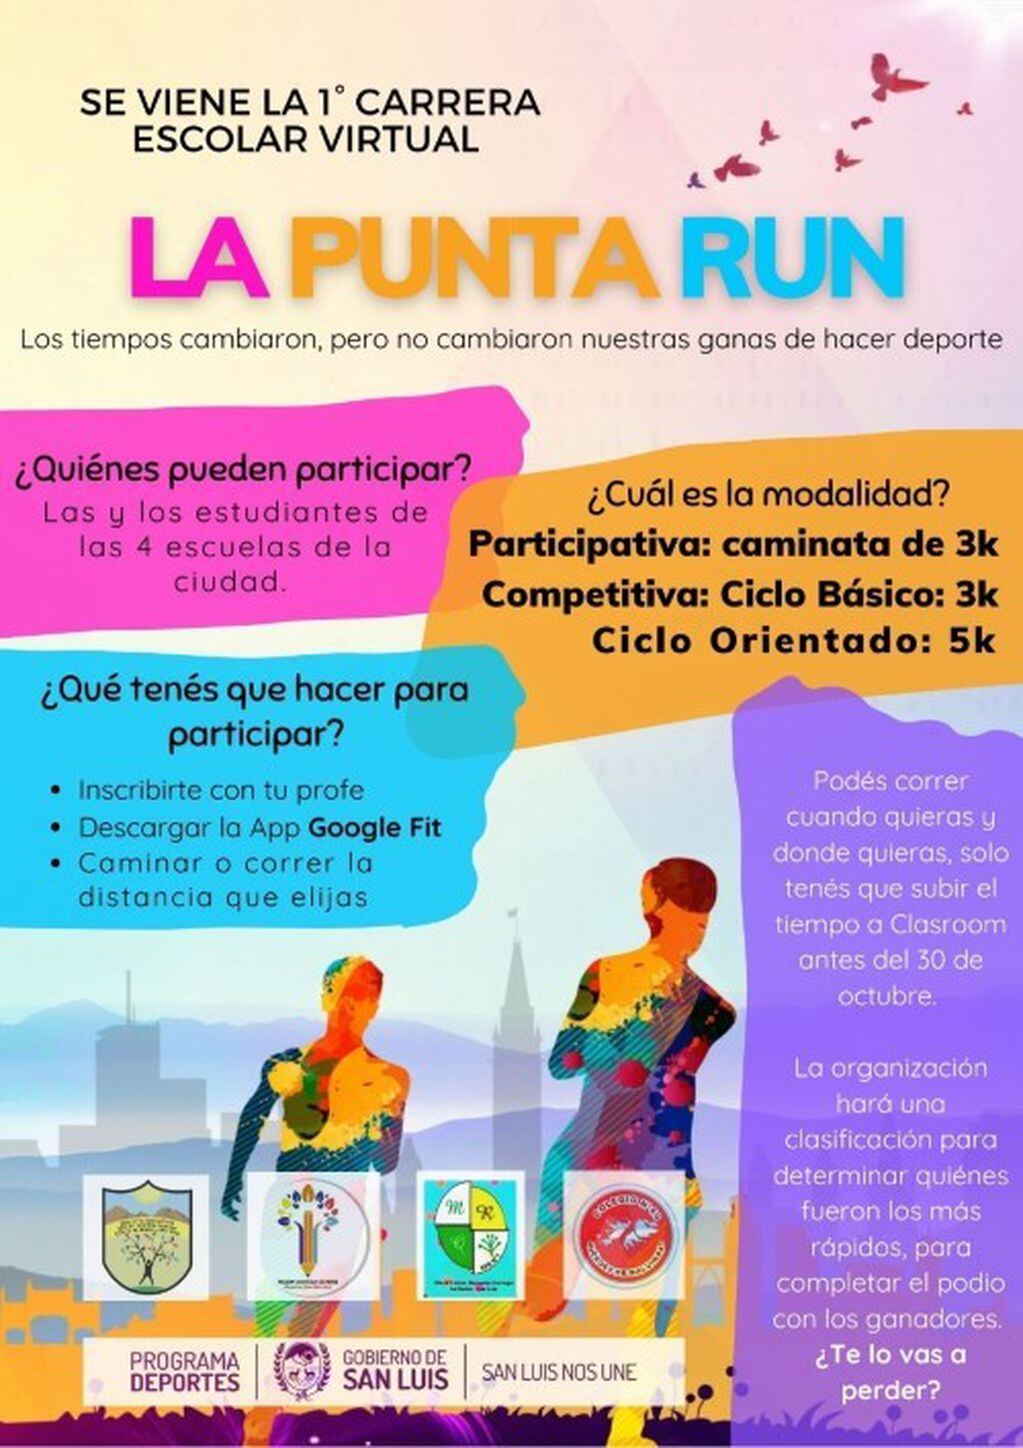 La Punta Run, carrera virtual escolar